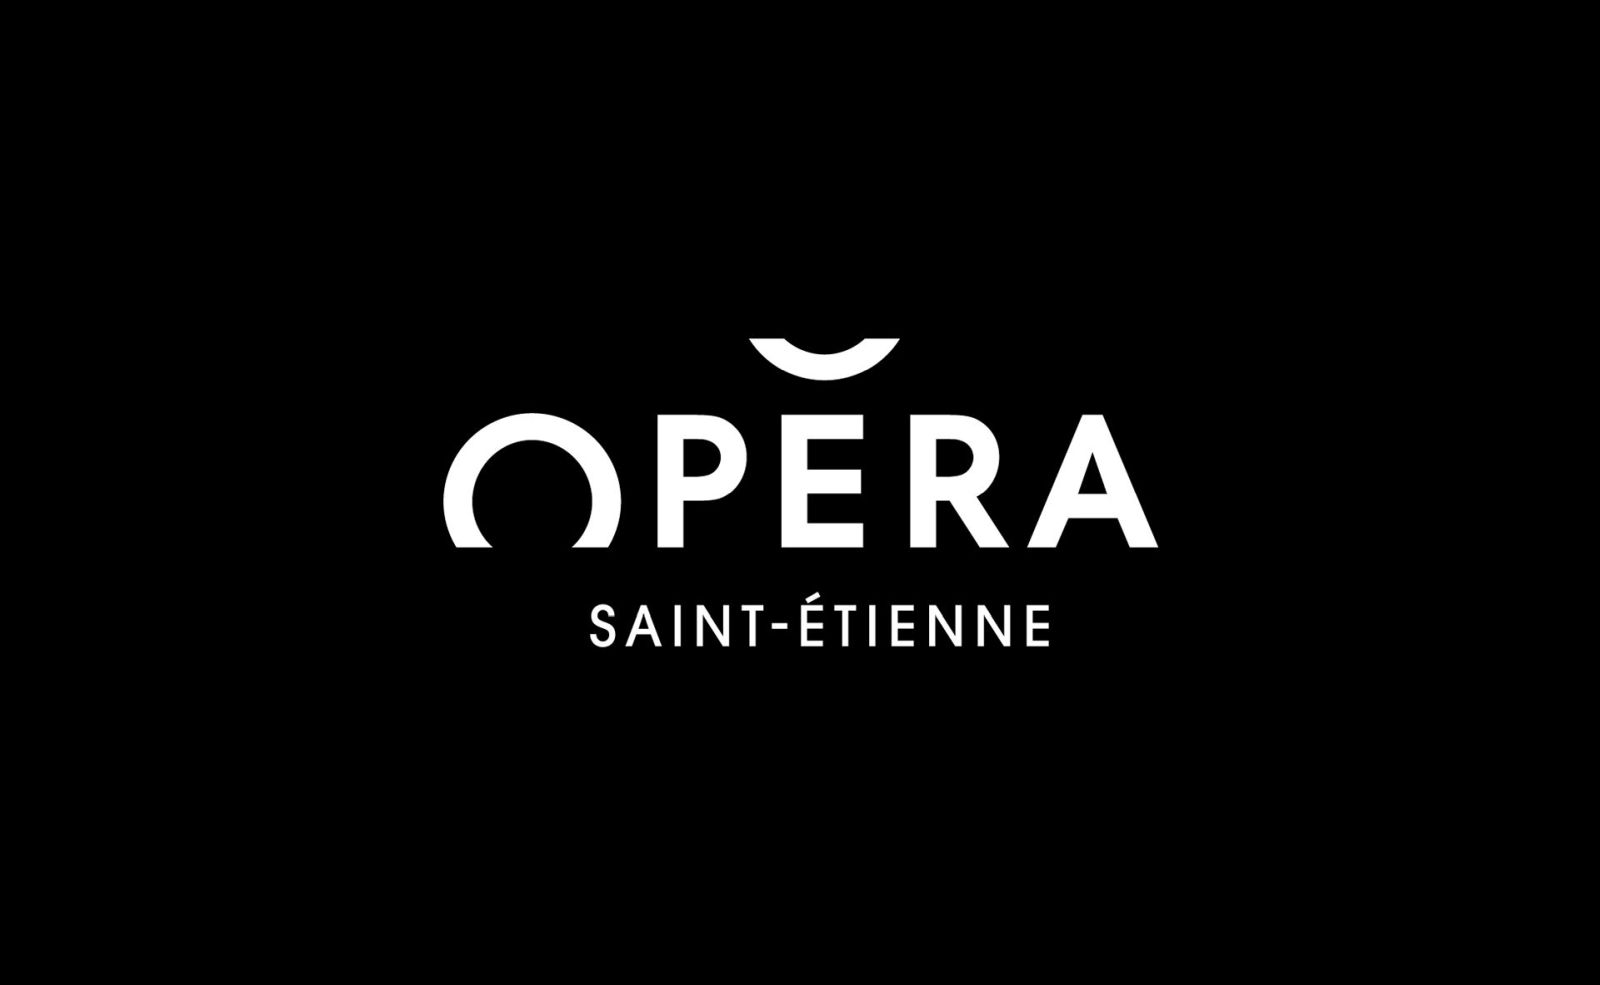 innovative brand design identity of saint etienne opera by grapheine